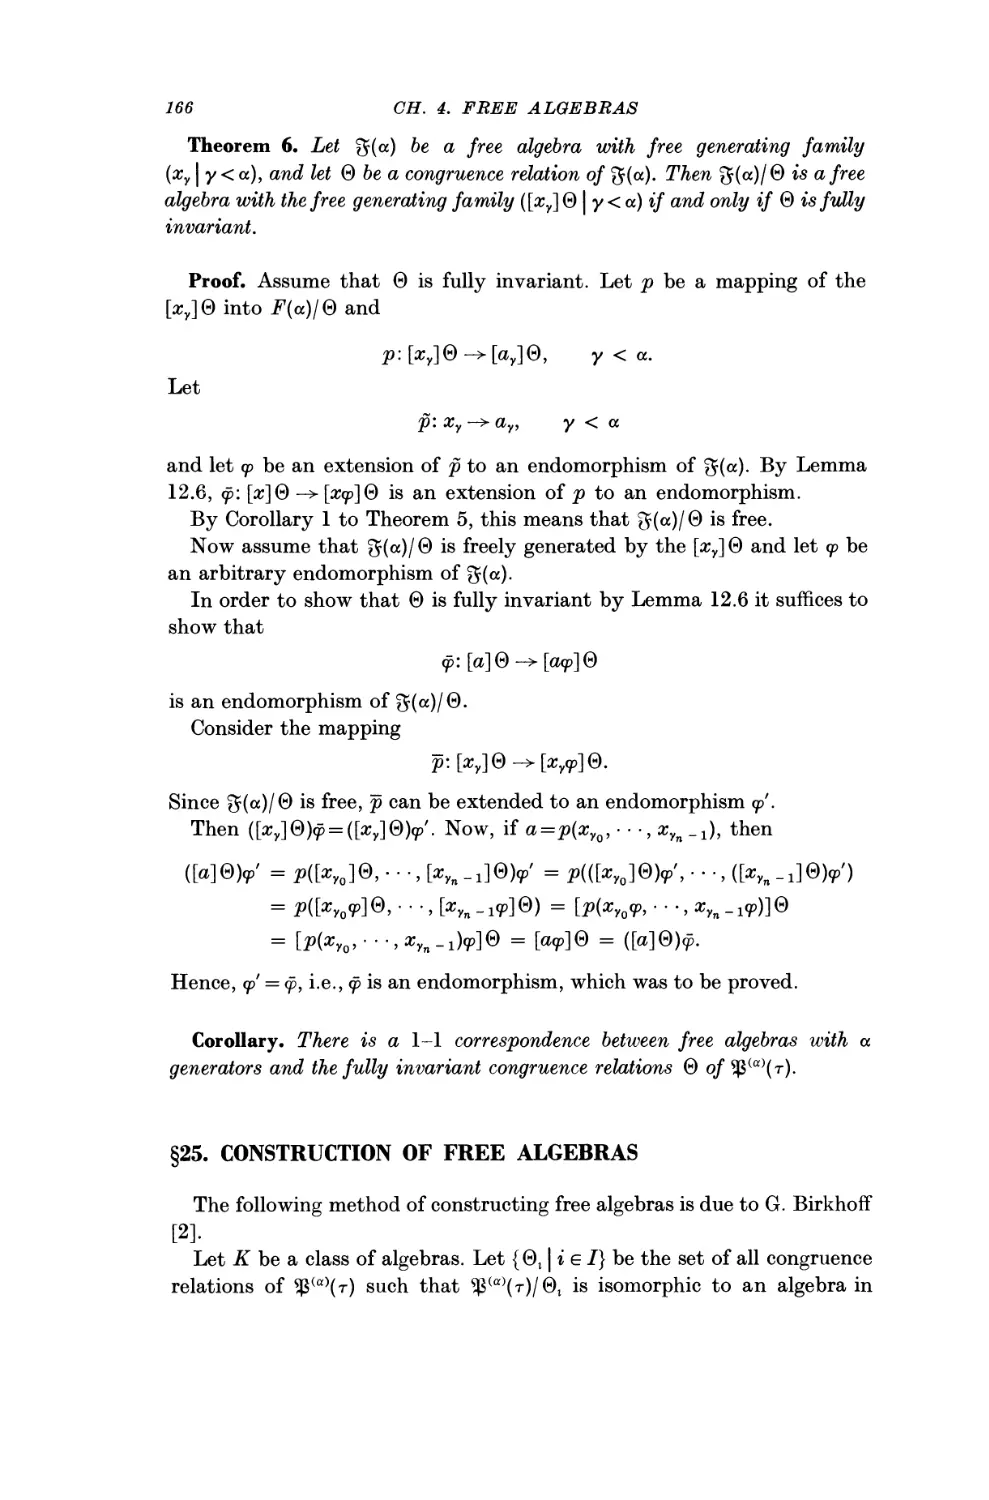 §25. Construction of Free Algebras